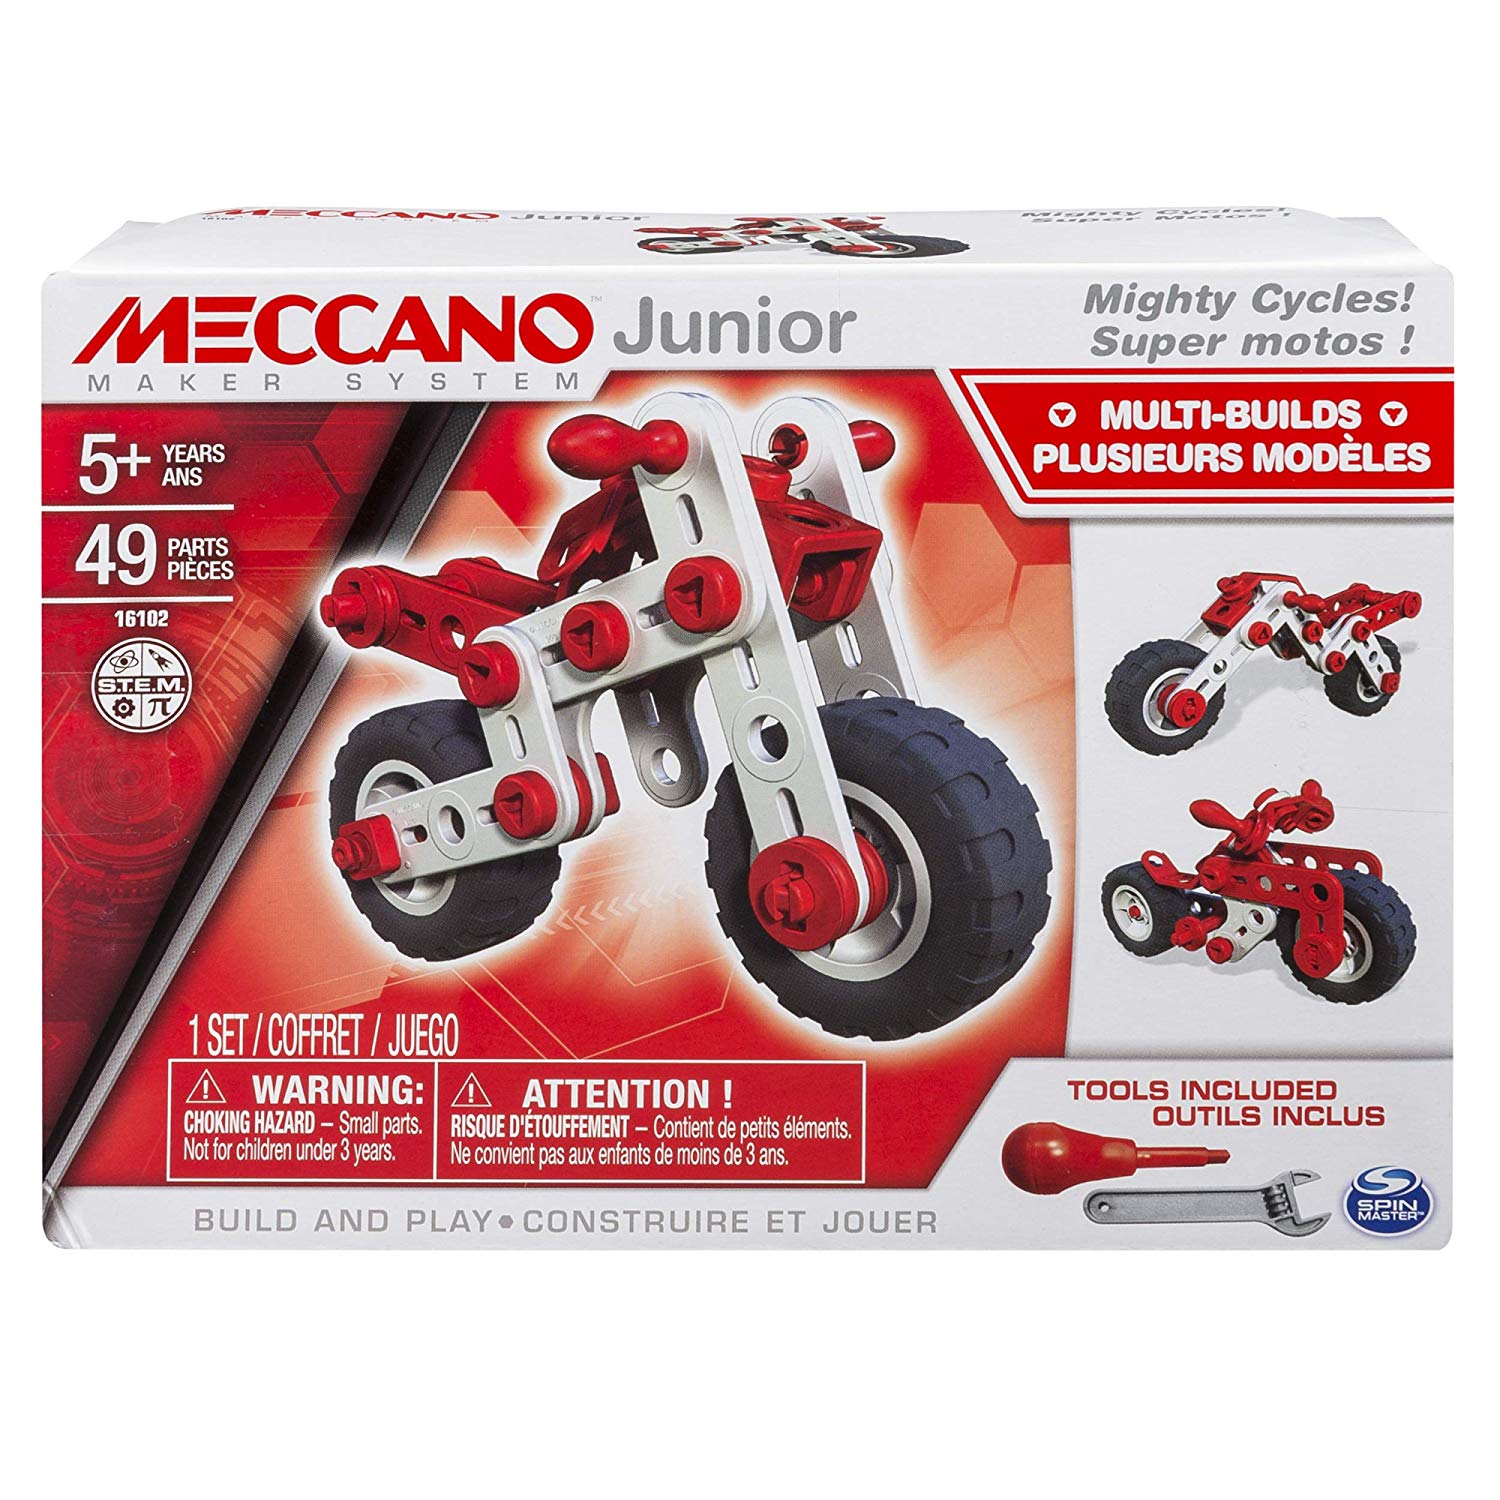 Meccano Junior, Truckin' Tractor, 4 modèles de construction, 87